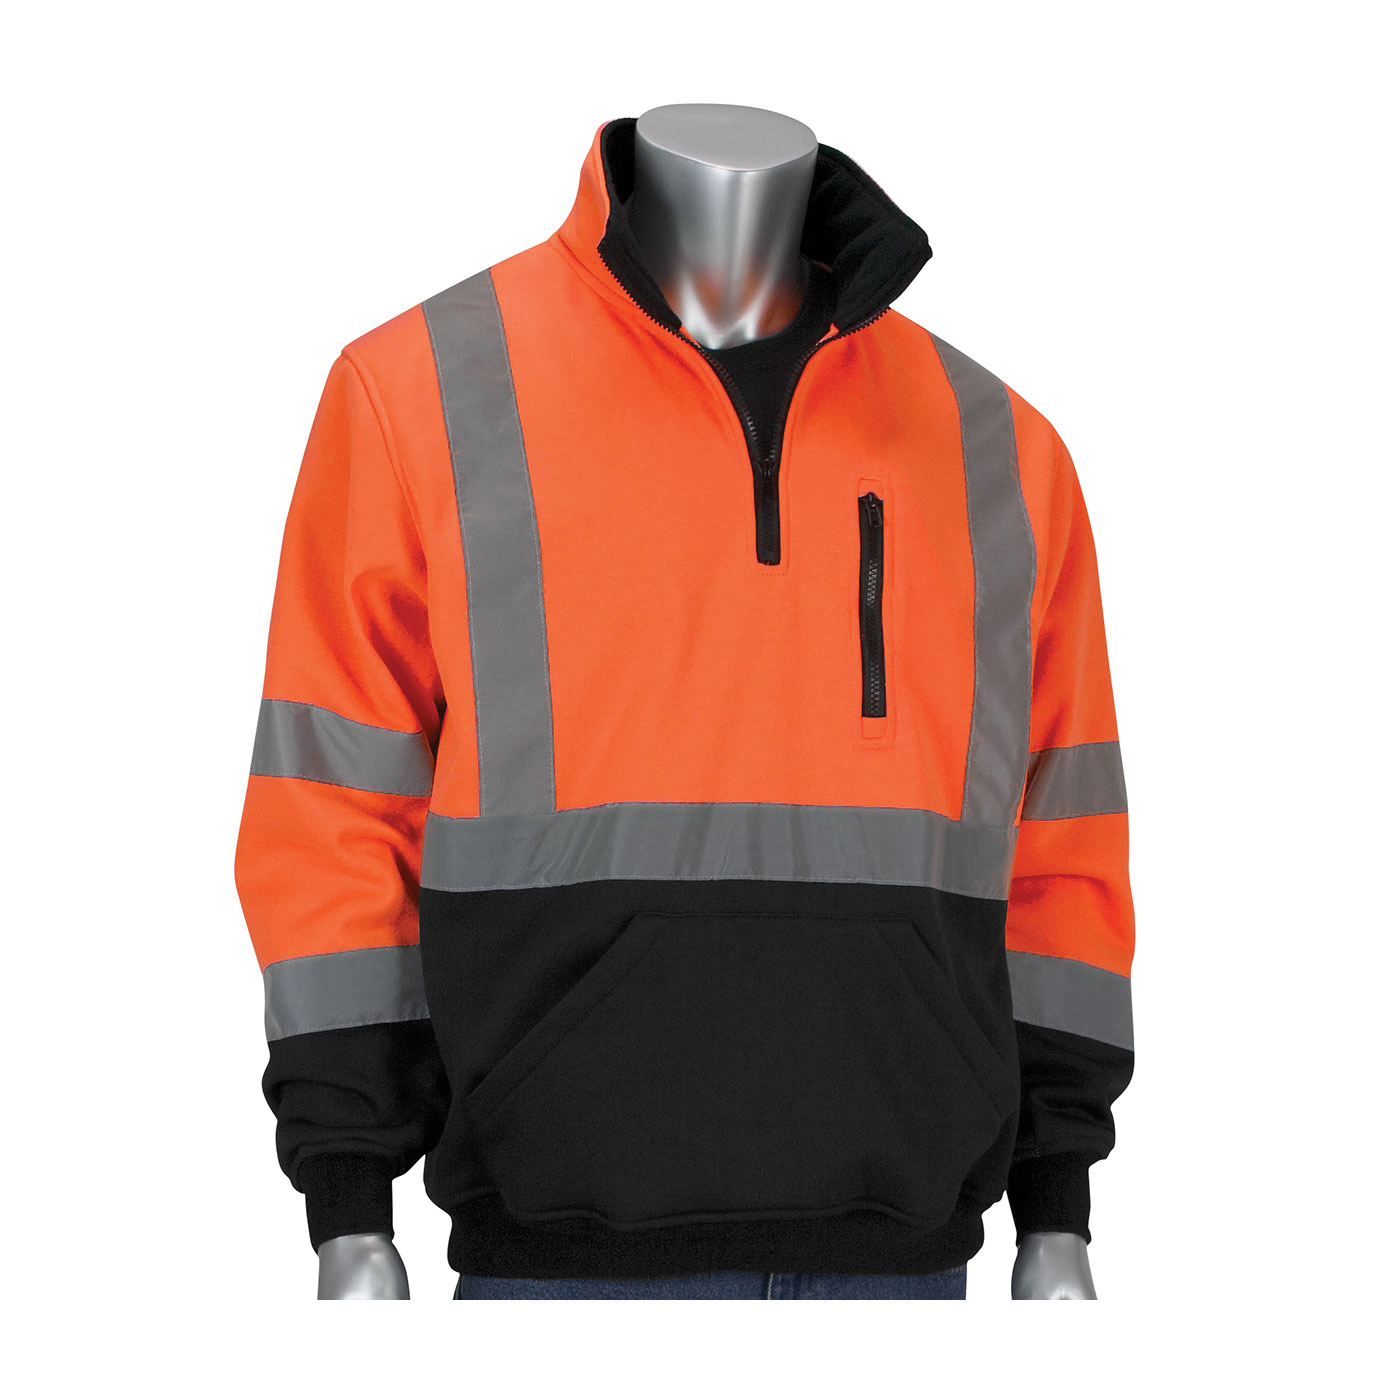 PIP® 323-1330B-OR/L Sweatshirt With Black Bottom, Unisex, L, Orange, 30 in L, Polyester Fleece